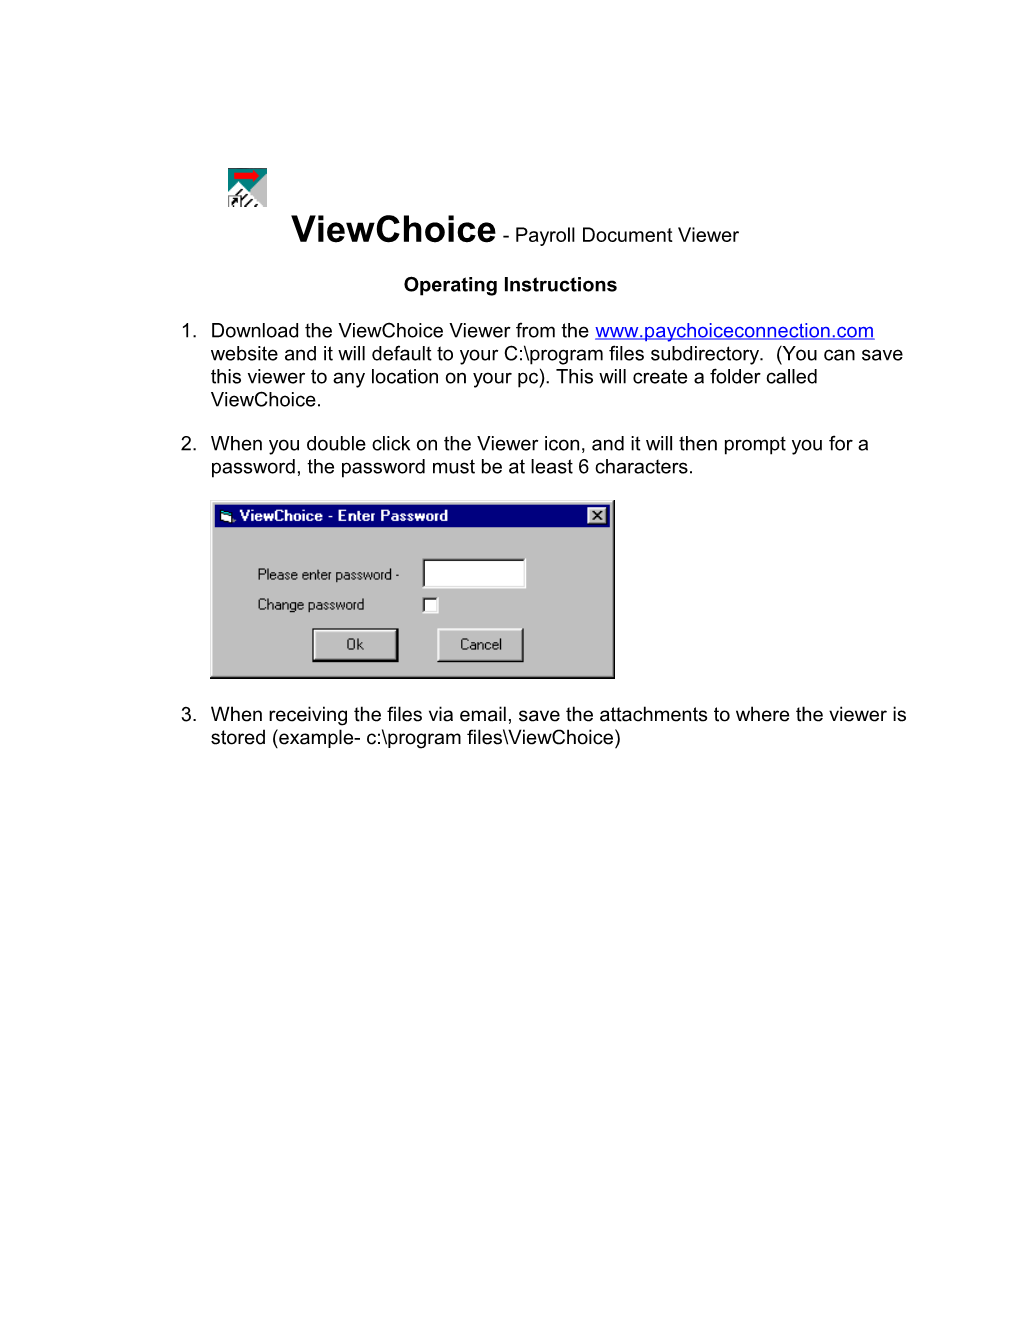 View Choice - Payroll Document Viewer